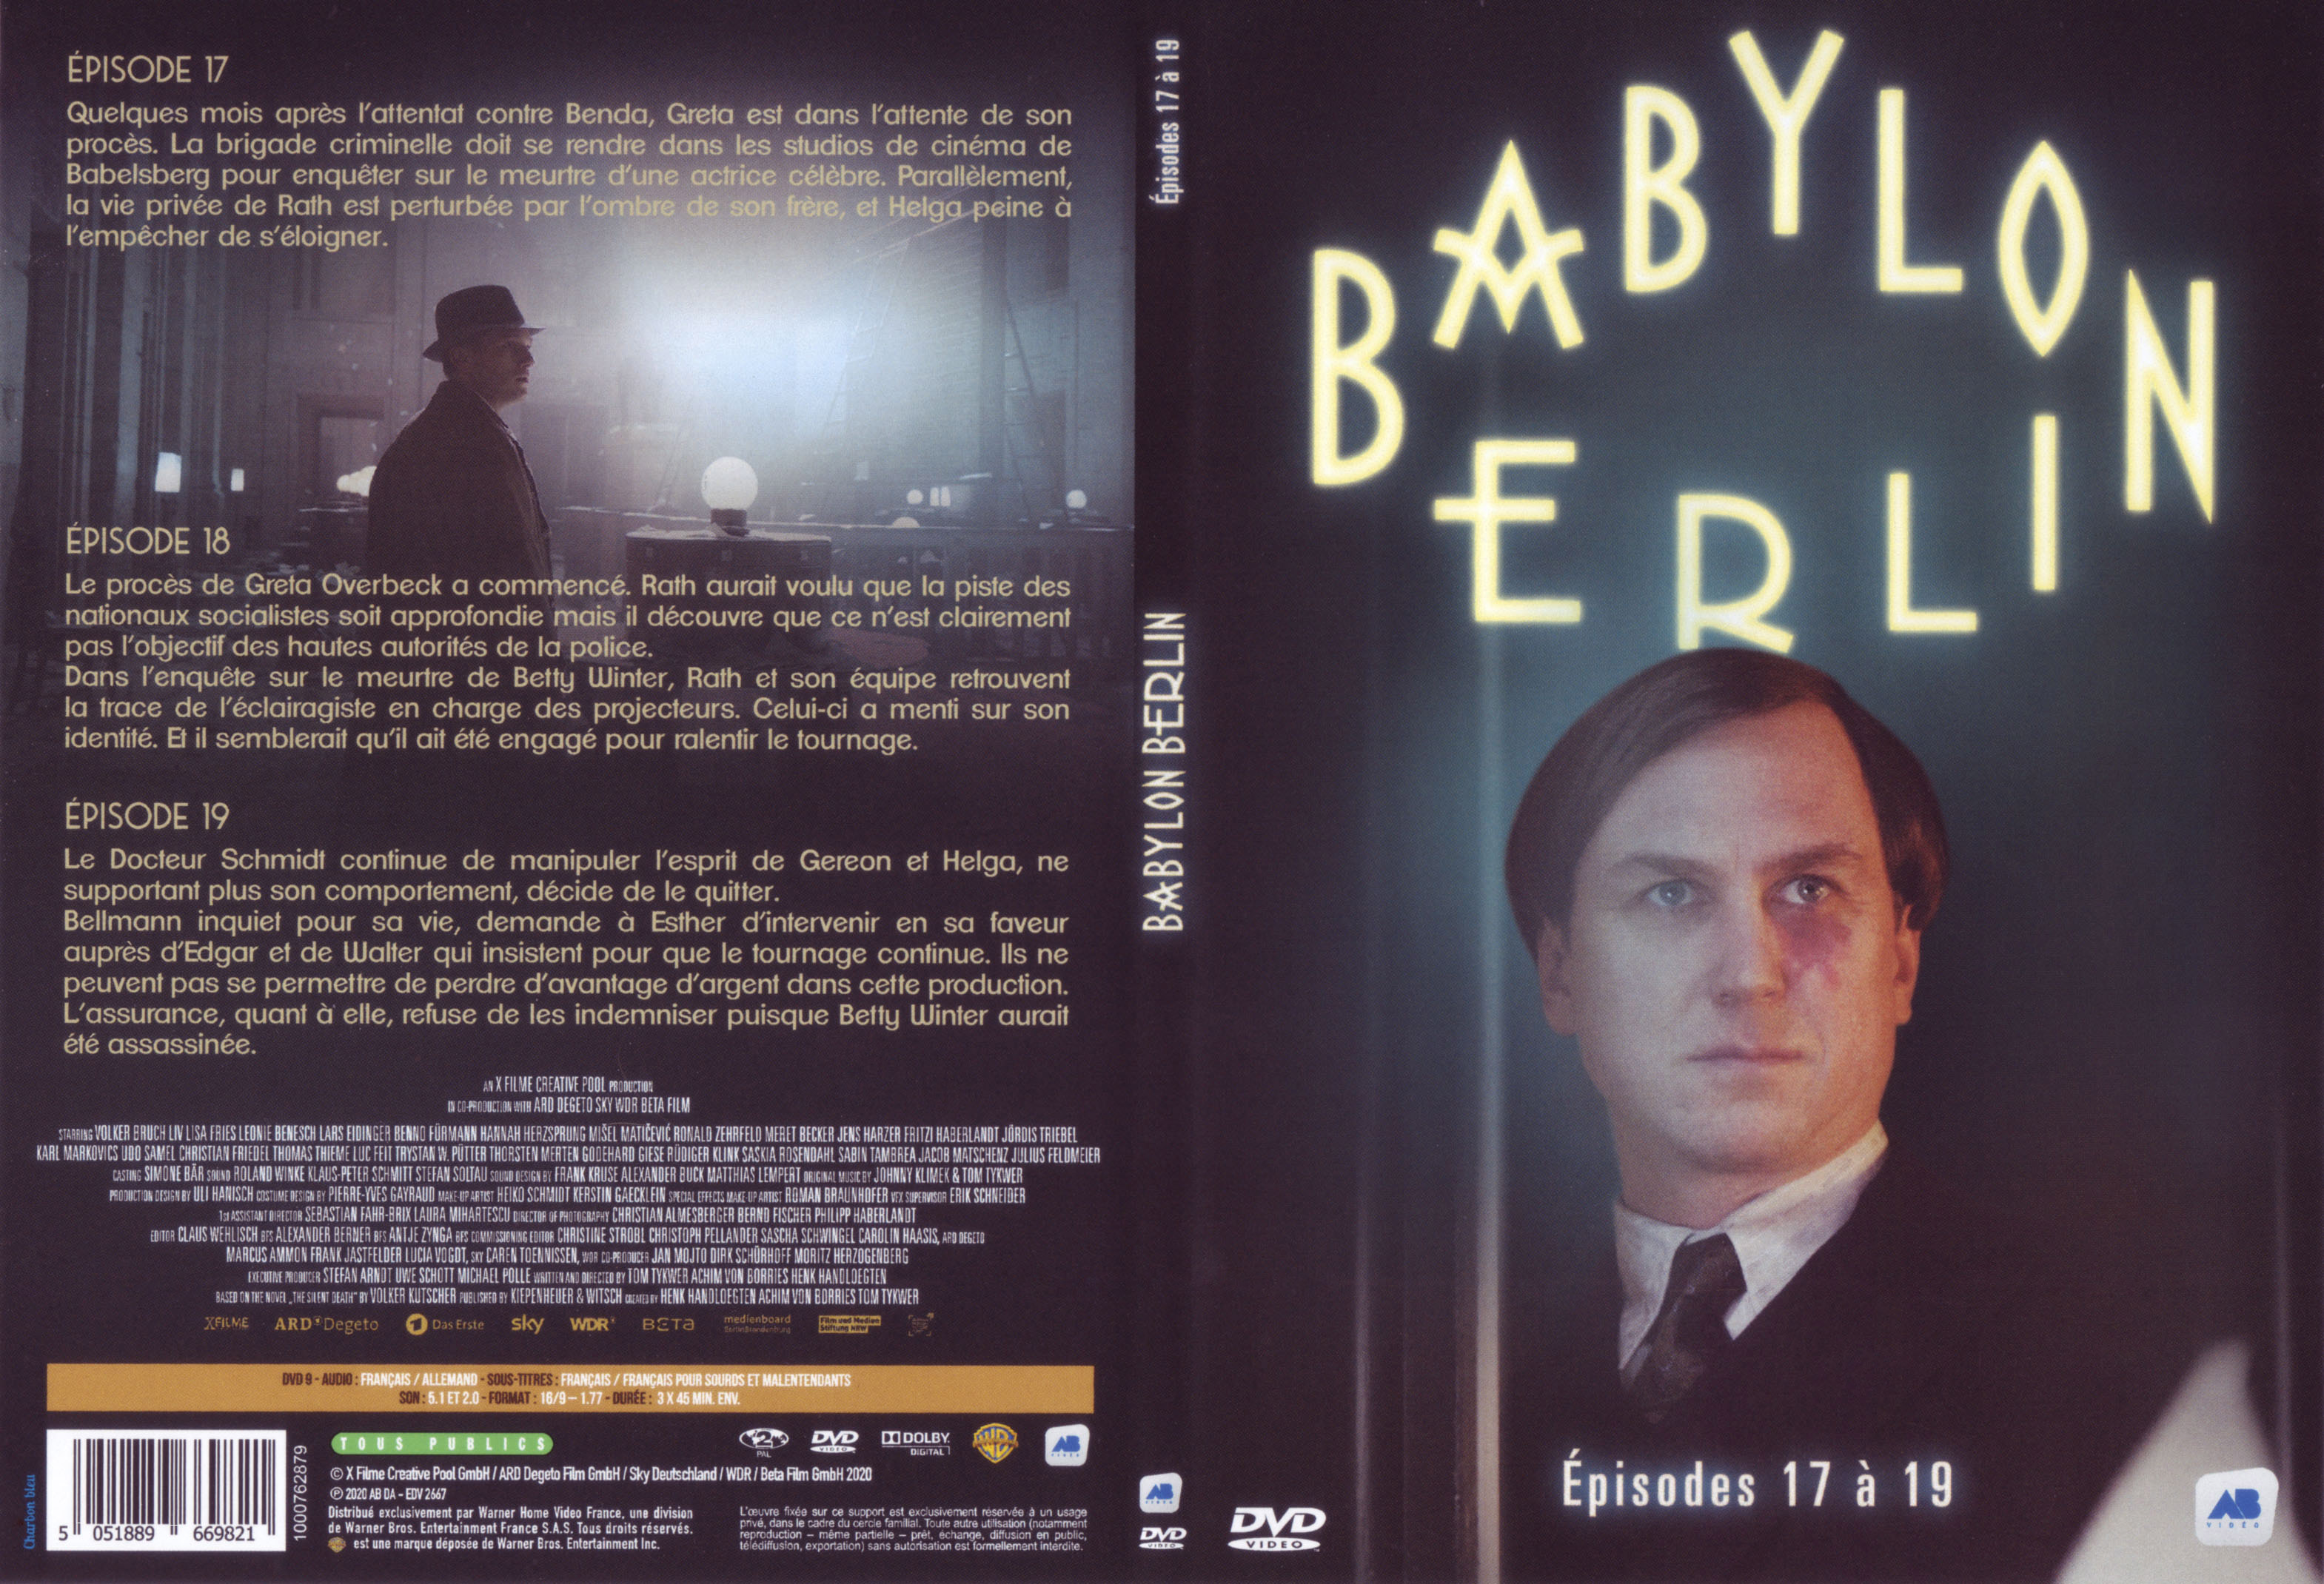 Jaquette DVD Babylon Berin Saison 3 Ep 17-19